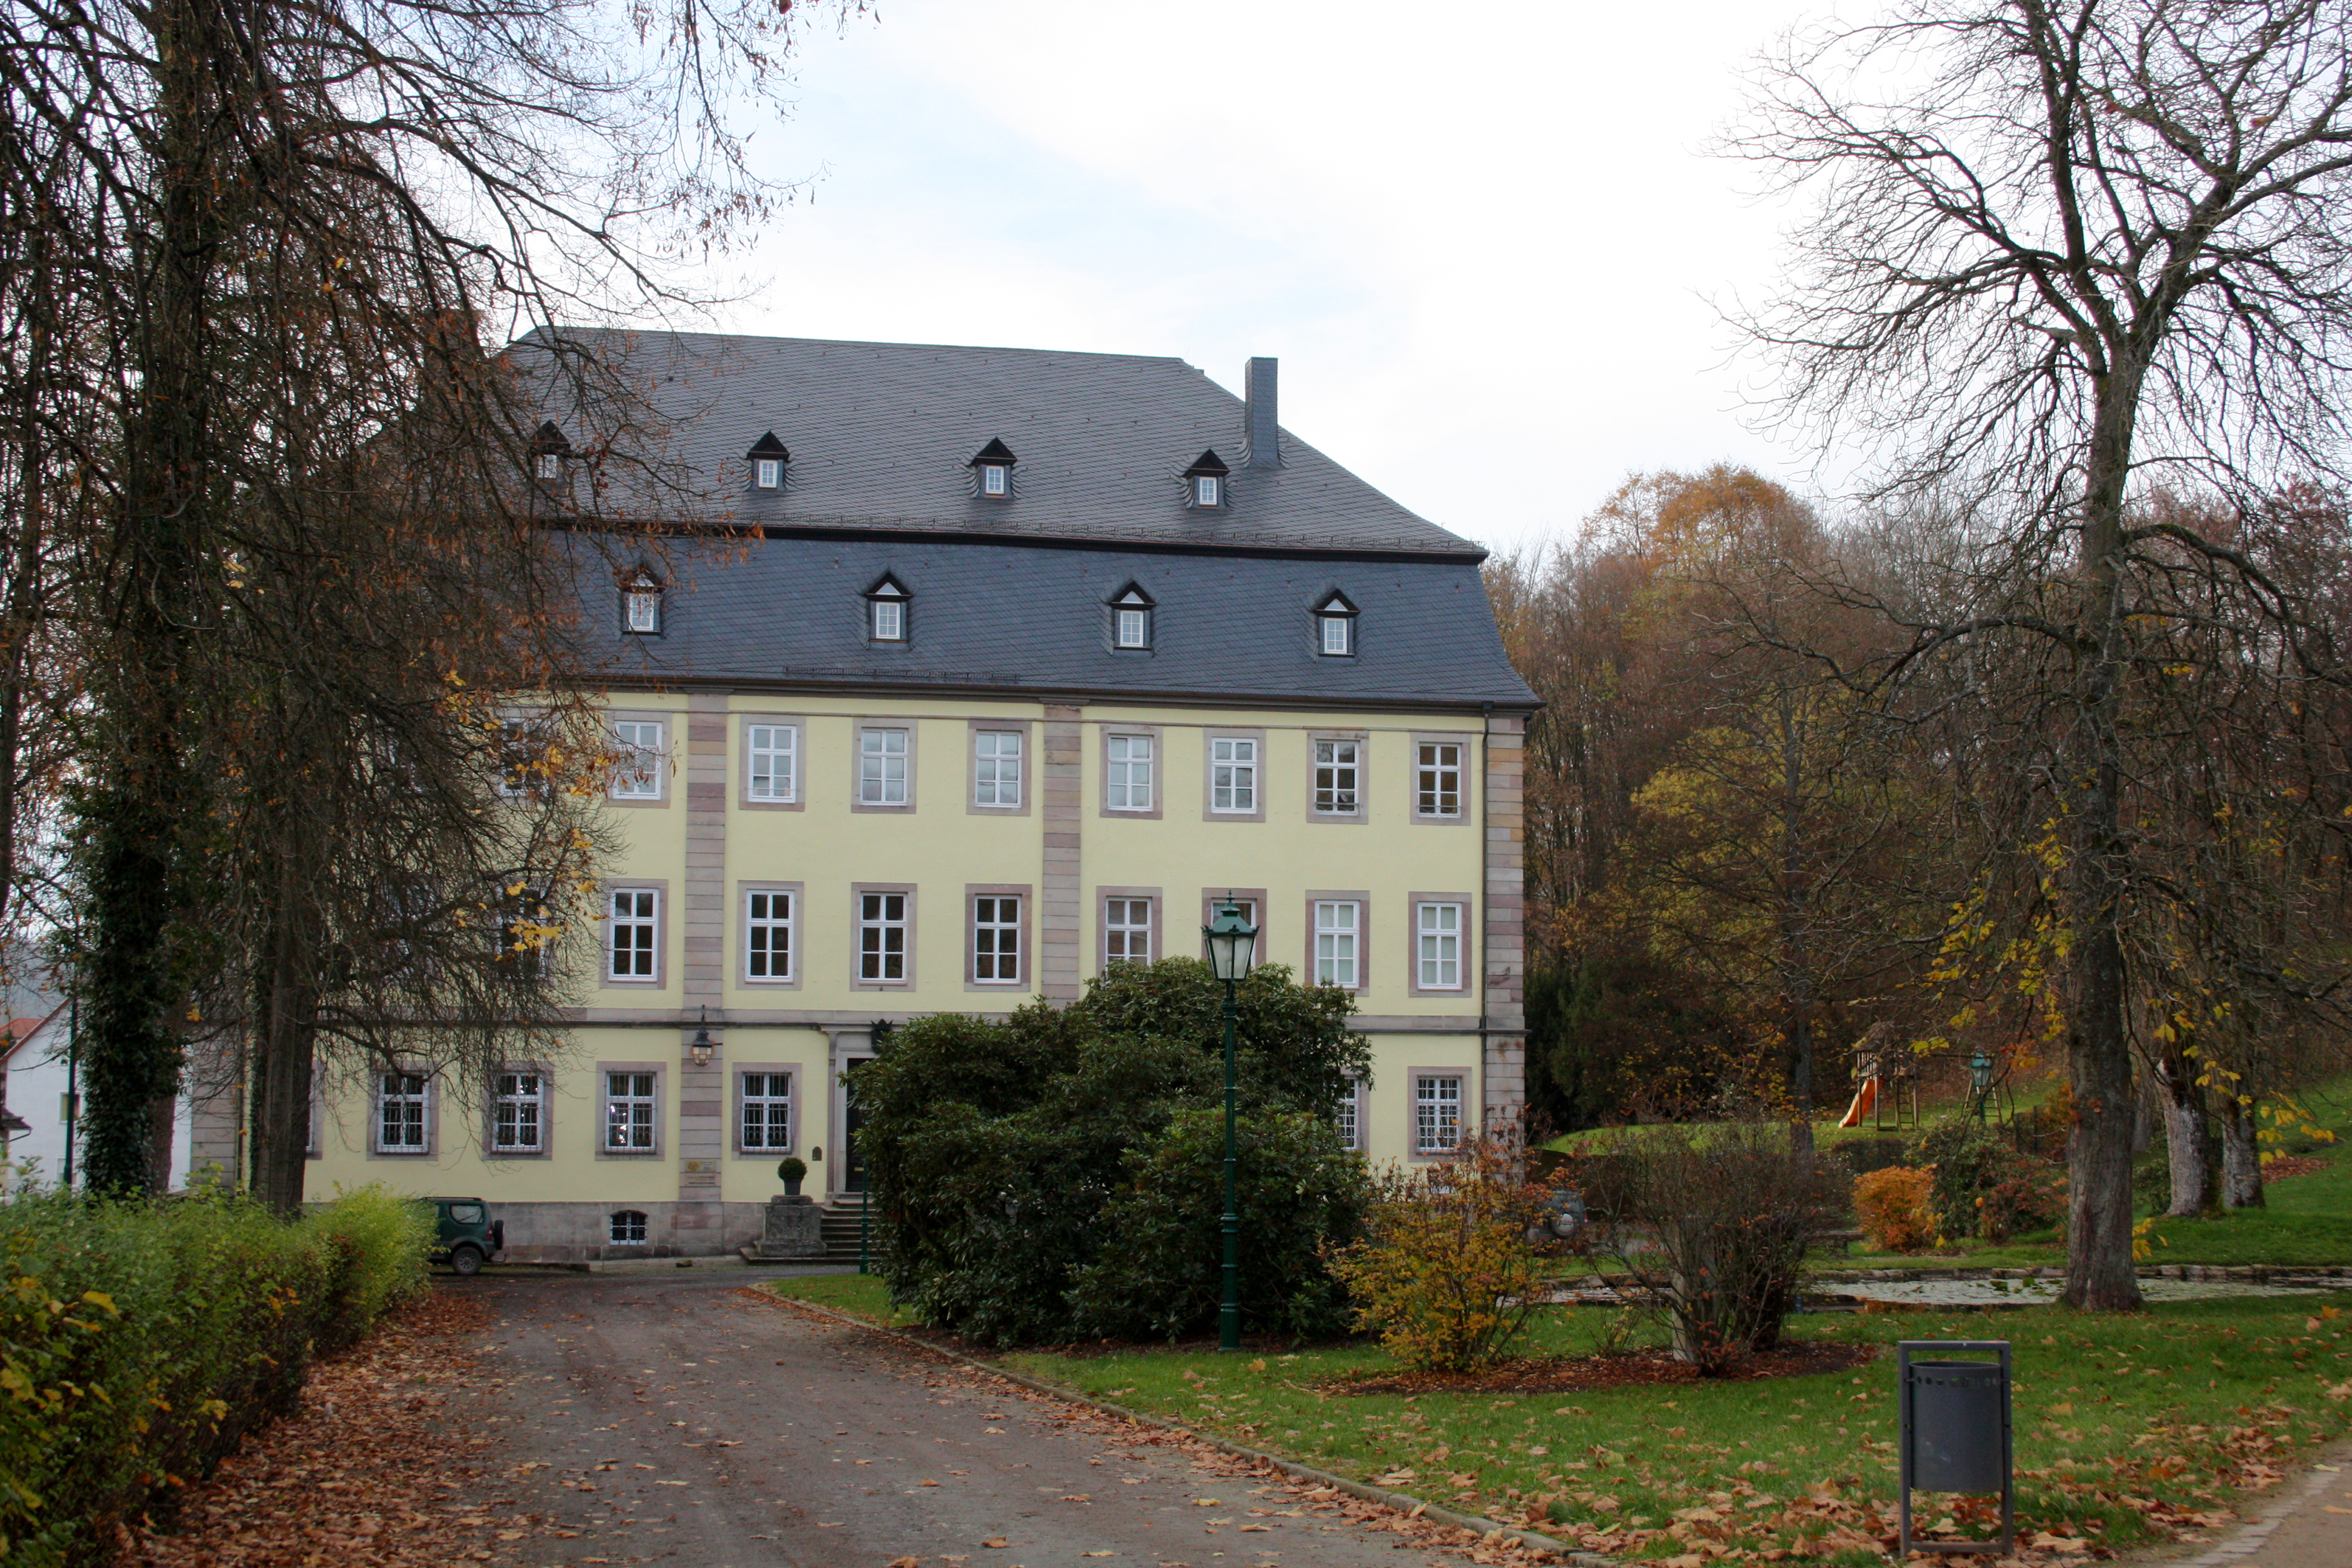 Gersfelder Barockschloss.
